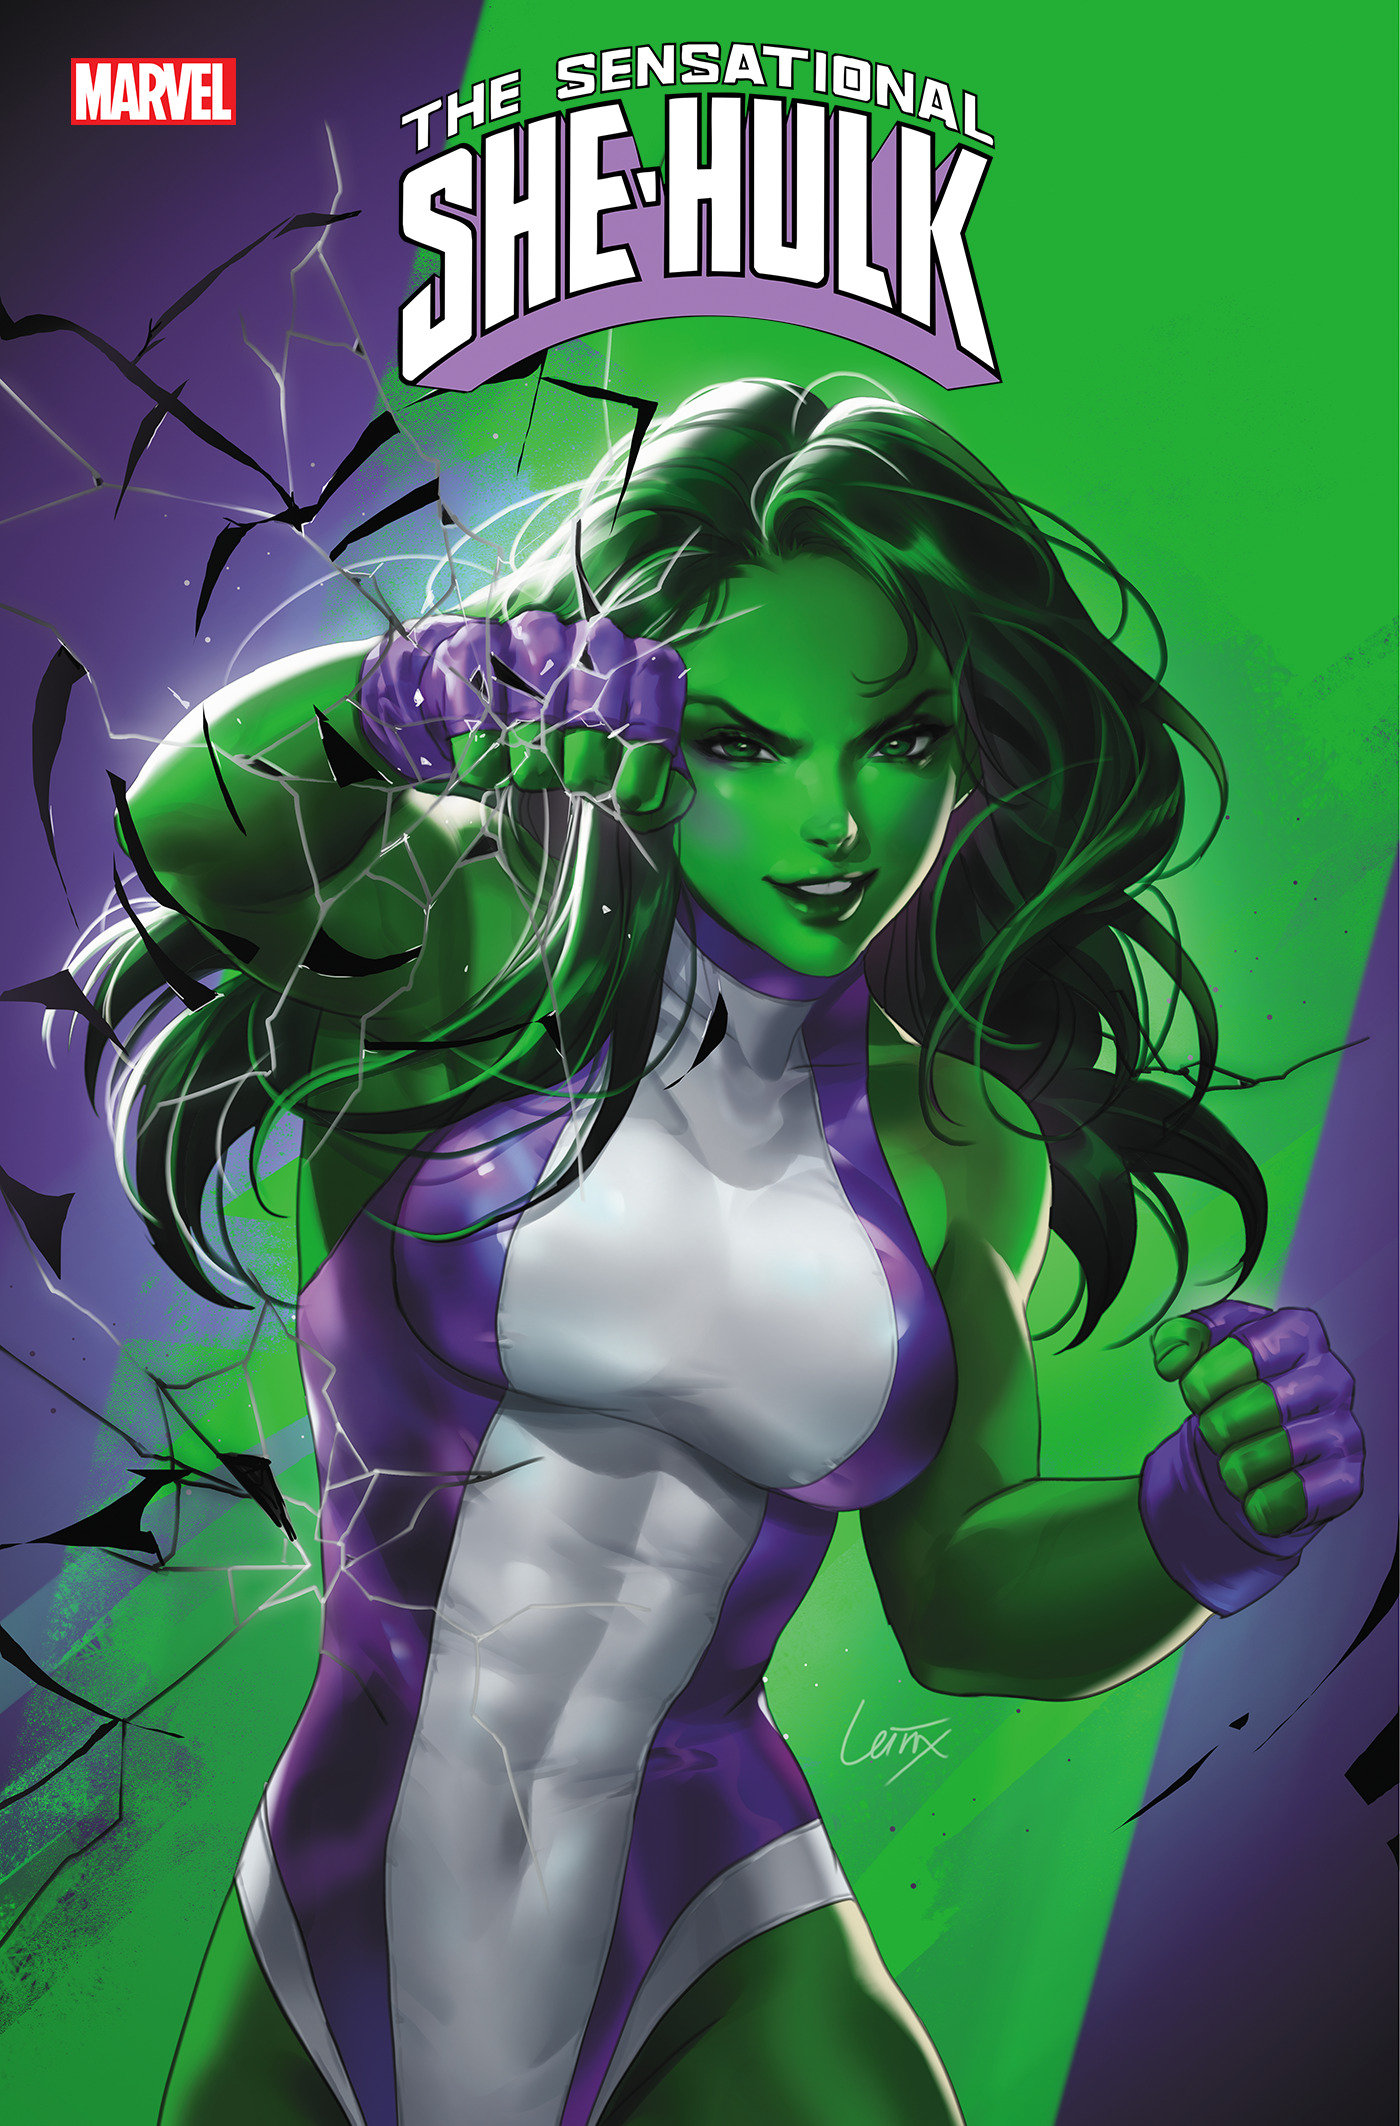 Sensational She-Hulk #1 Leirix She-Hulk Variant